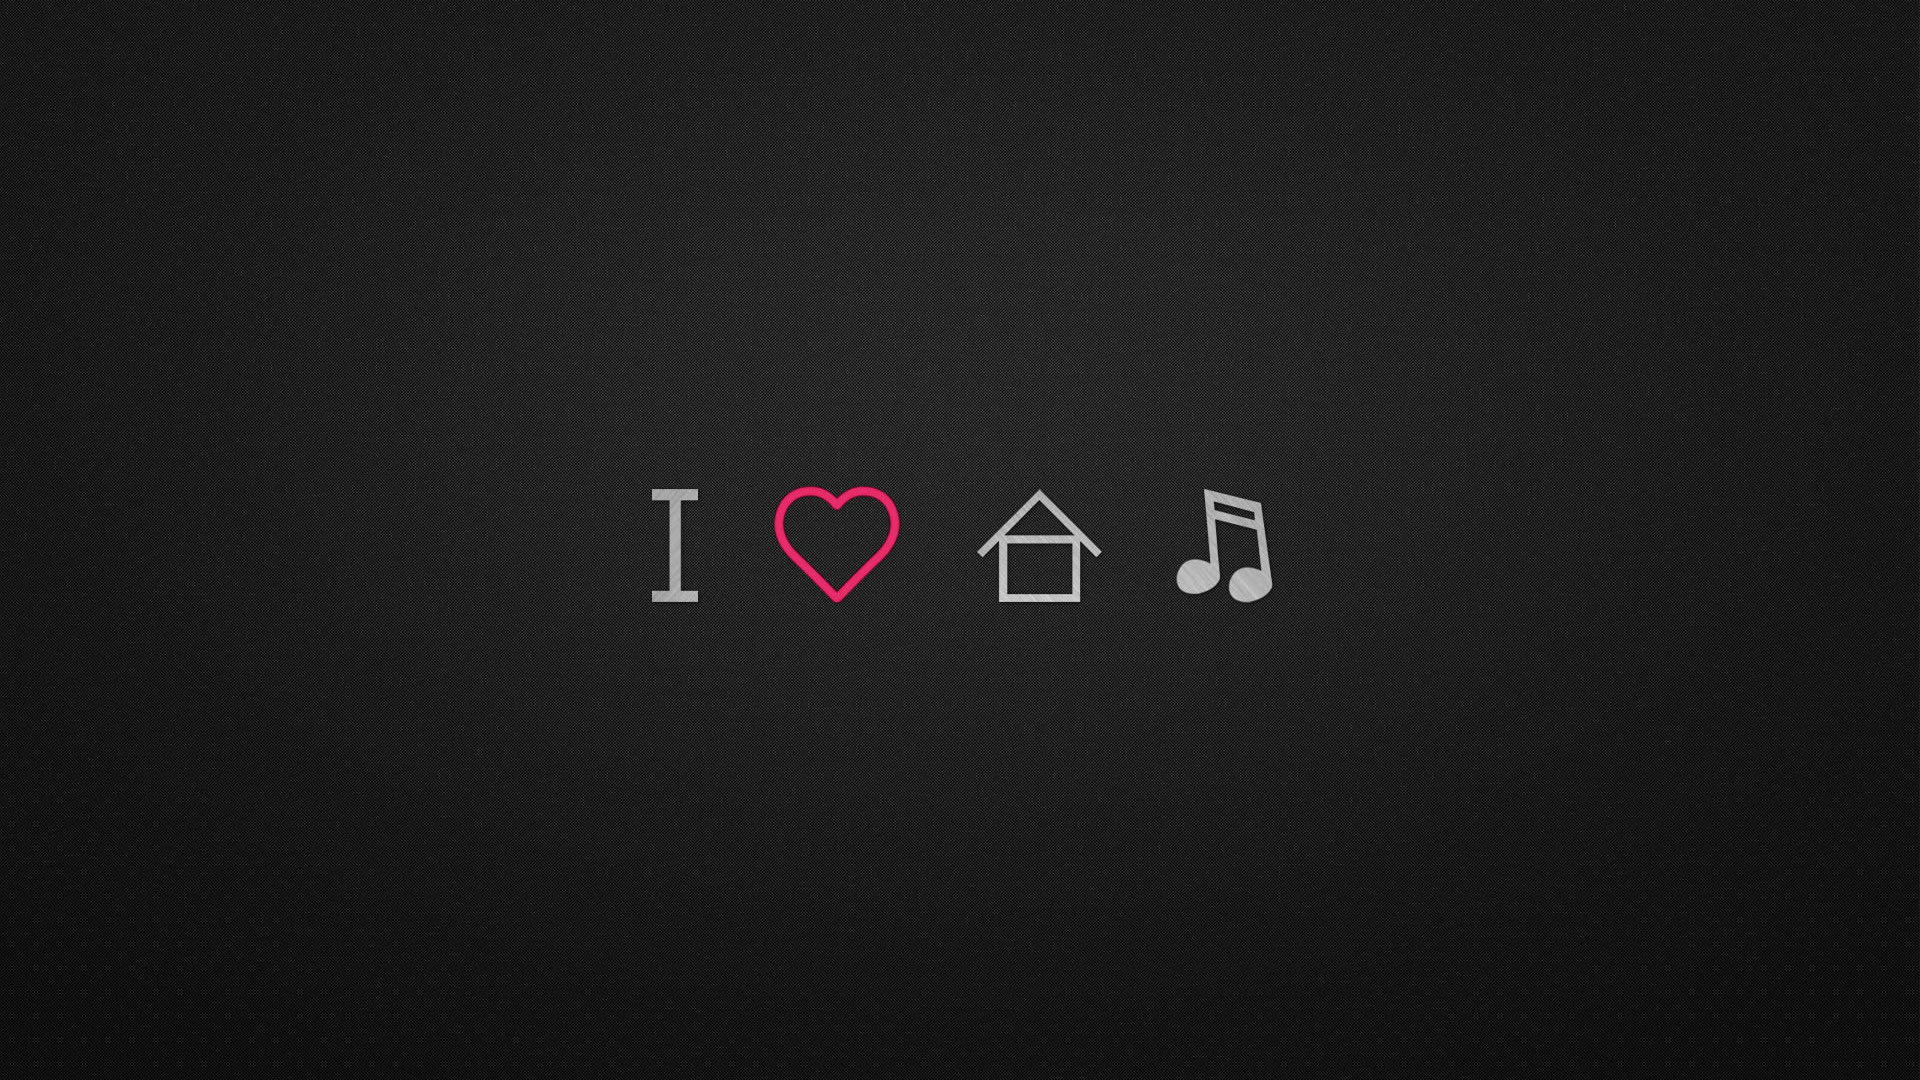 I, music, house, love